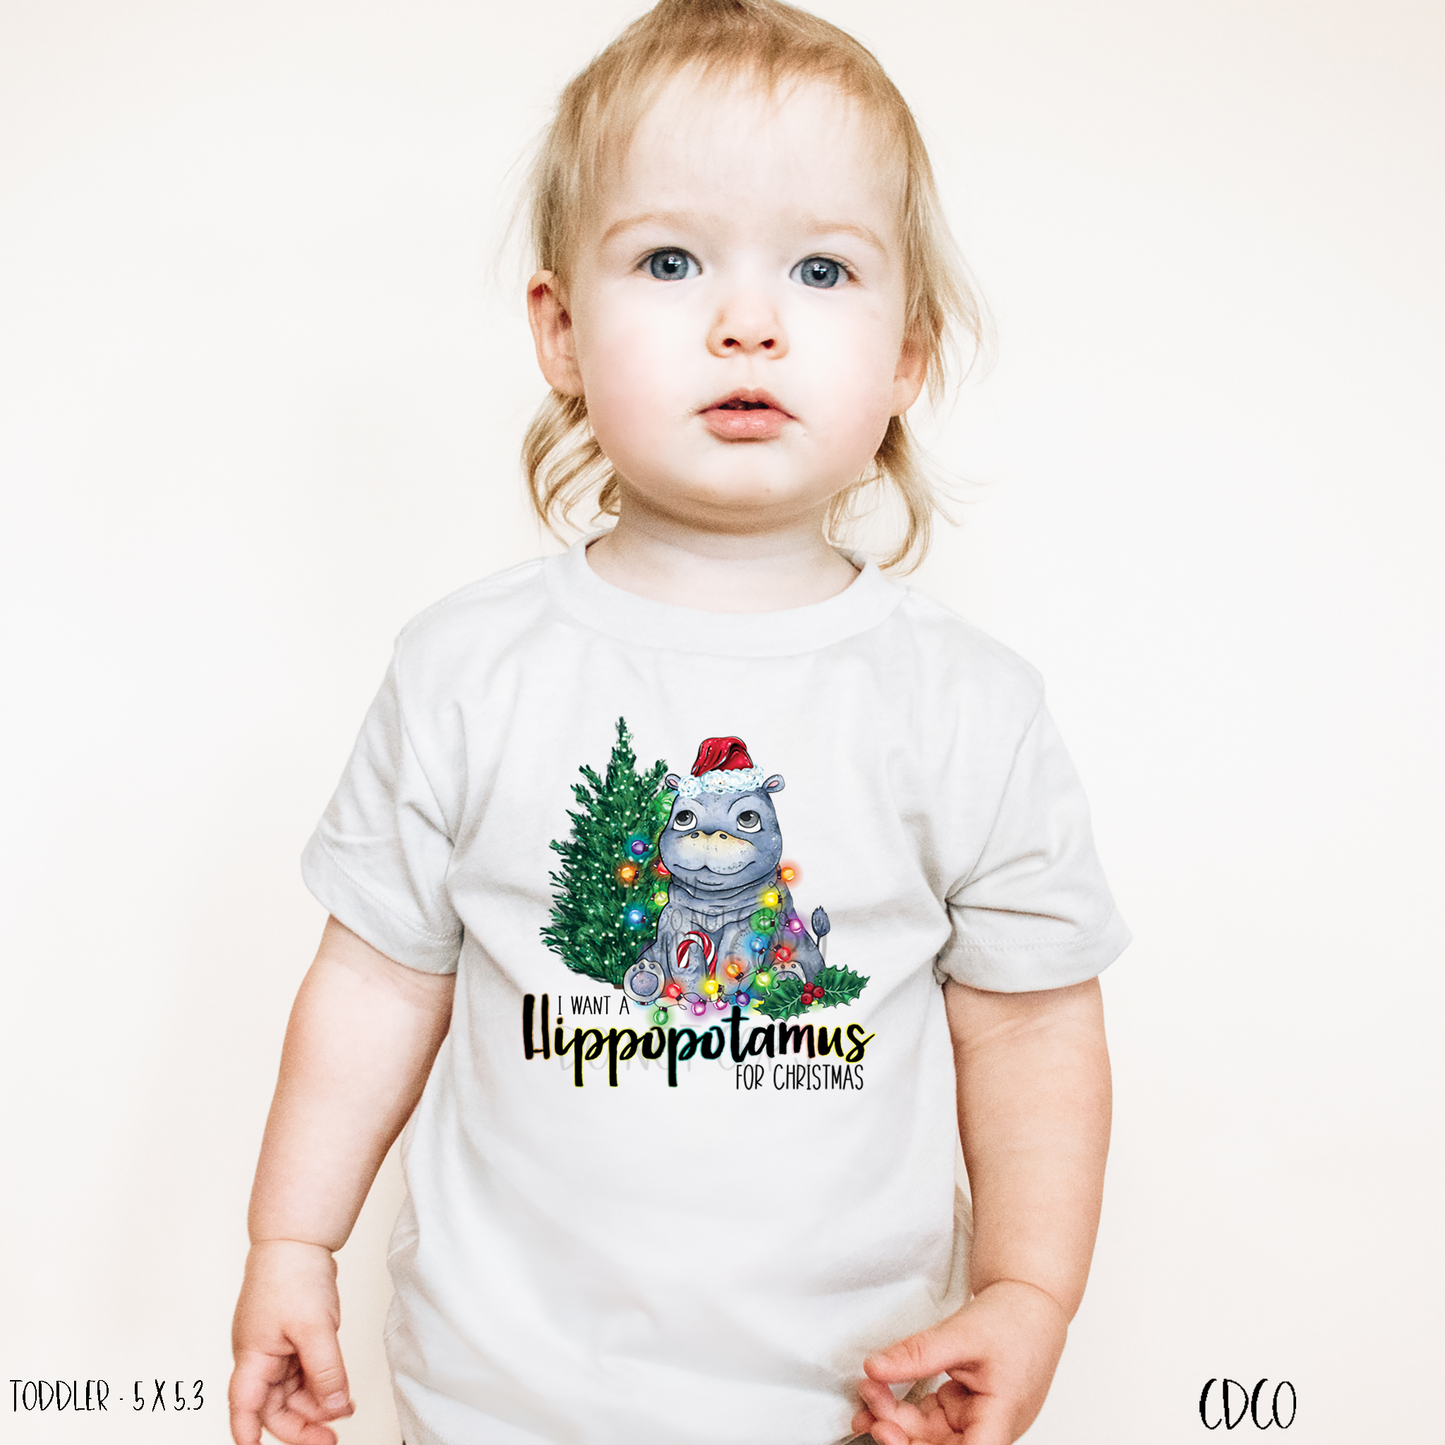 I Want a Hippopotamus for Christmas - TODDLER (350°-375°)